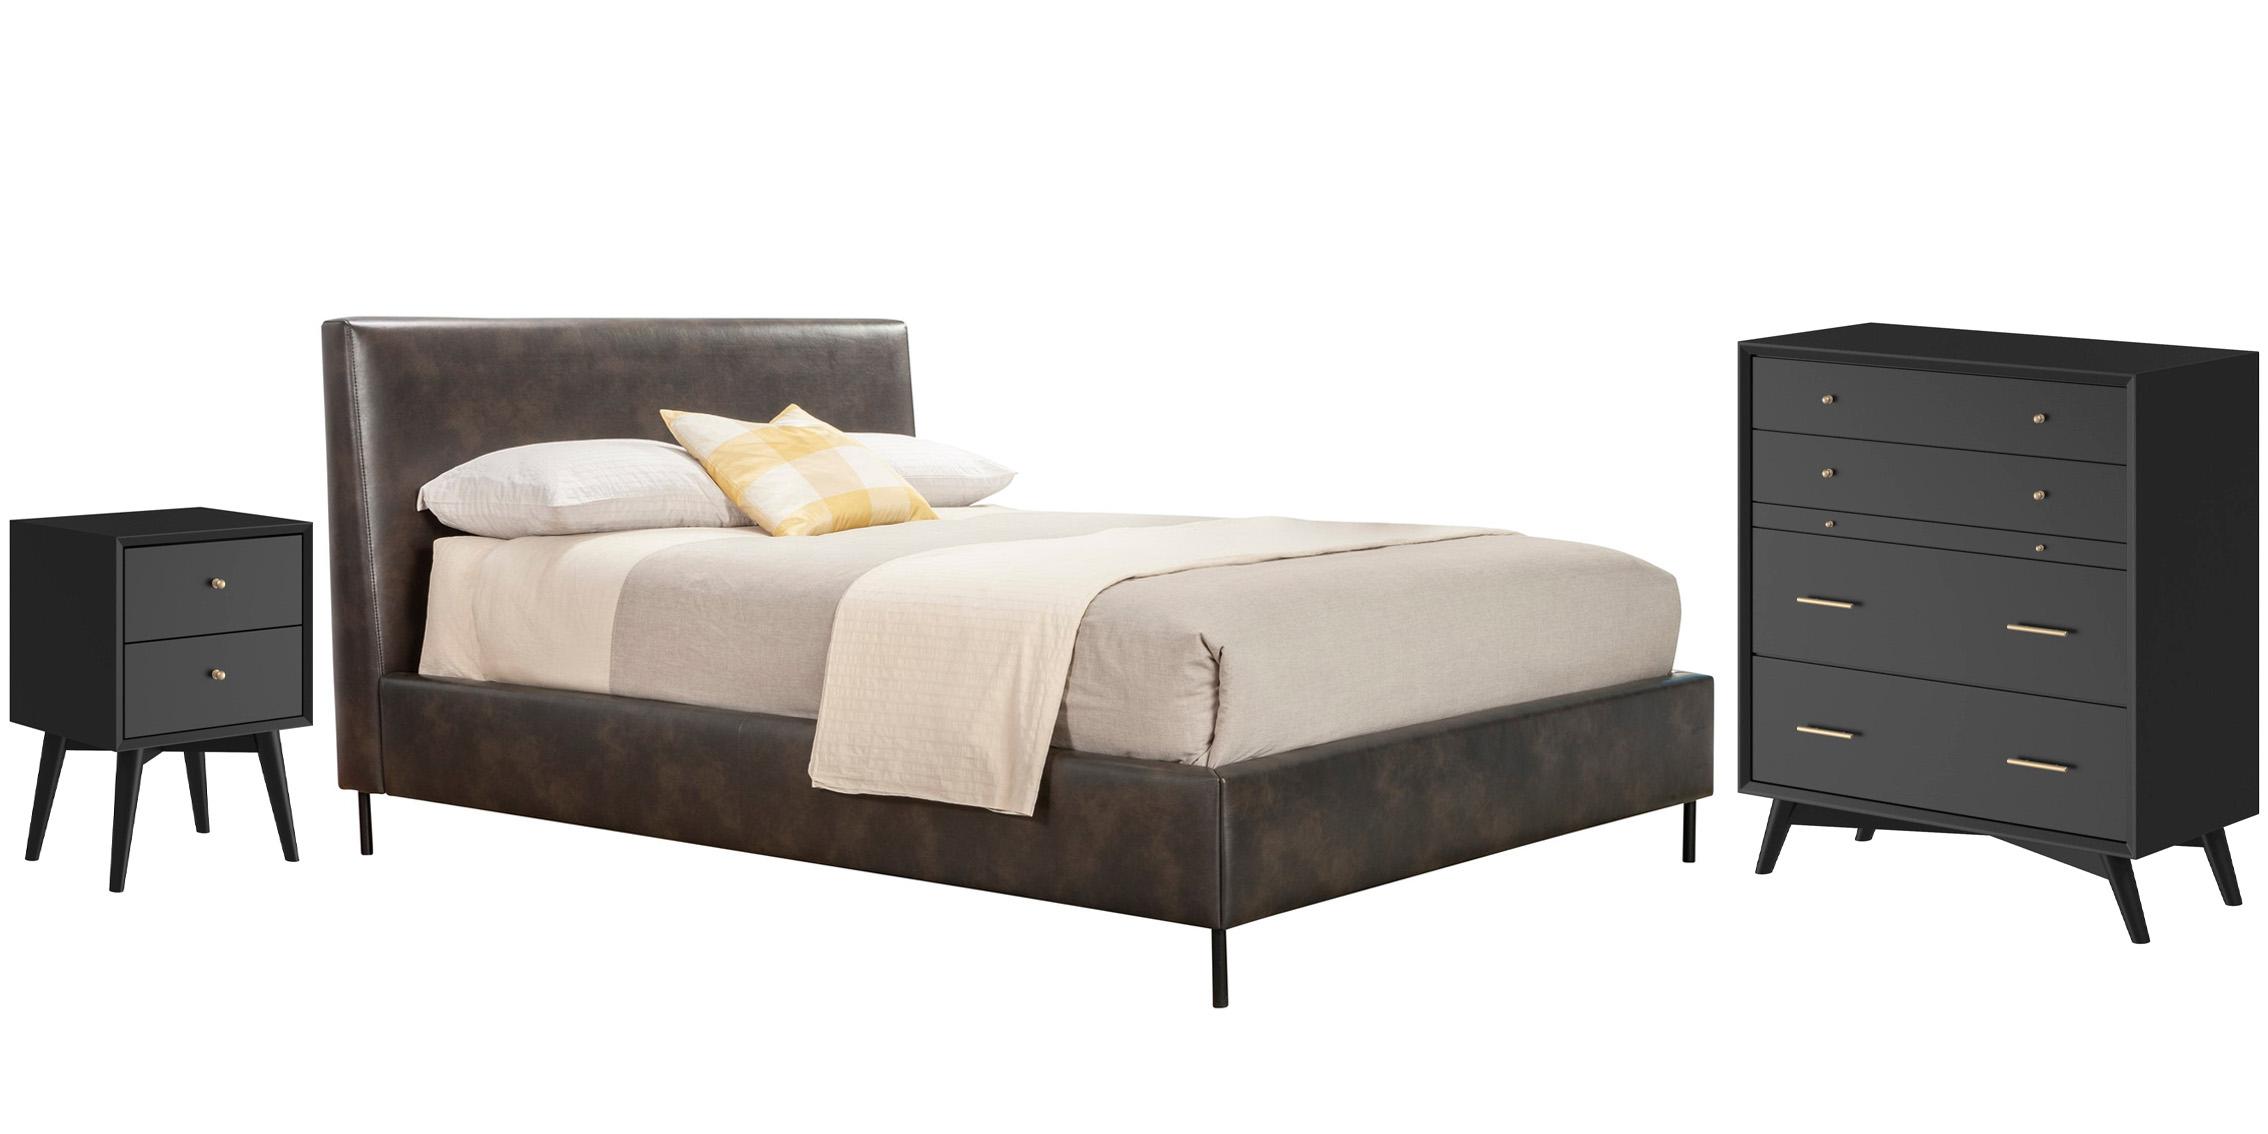 Modern Platform Bedroom Set SOPHIA / FLYNN 6902CK-GRY-Set-3-BLK in Gray, Black Faux Leather